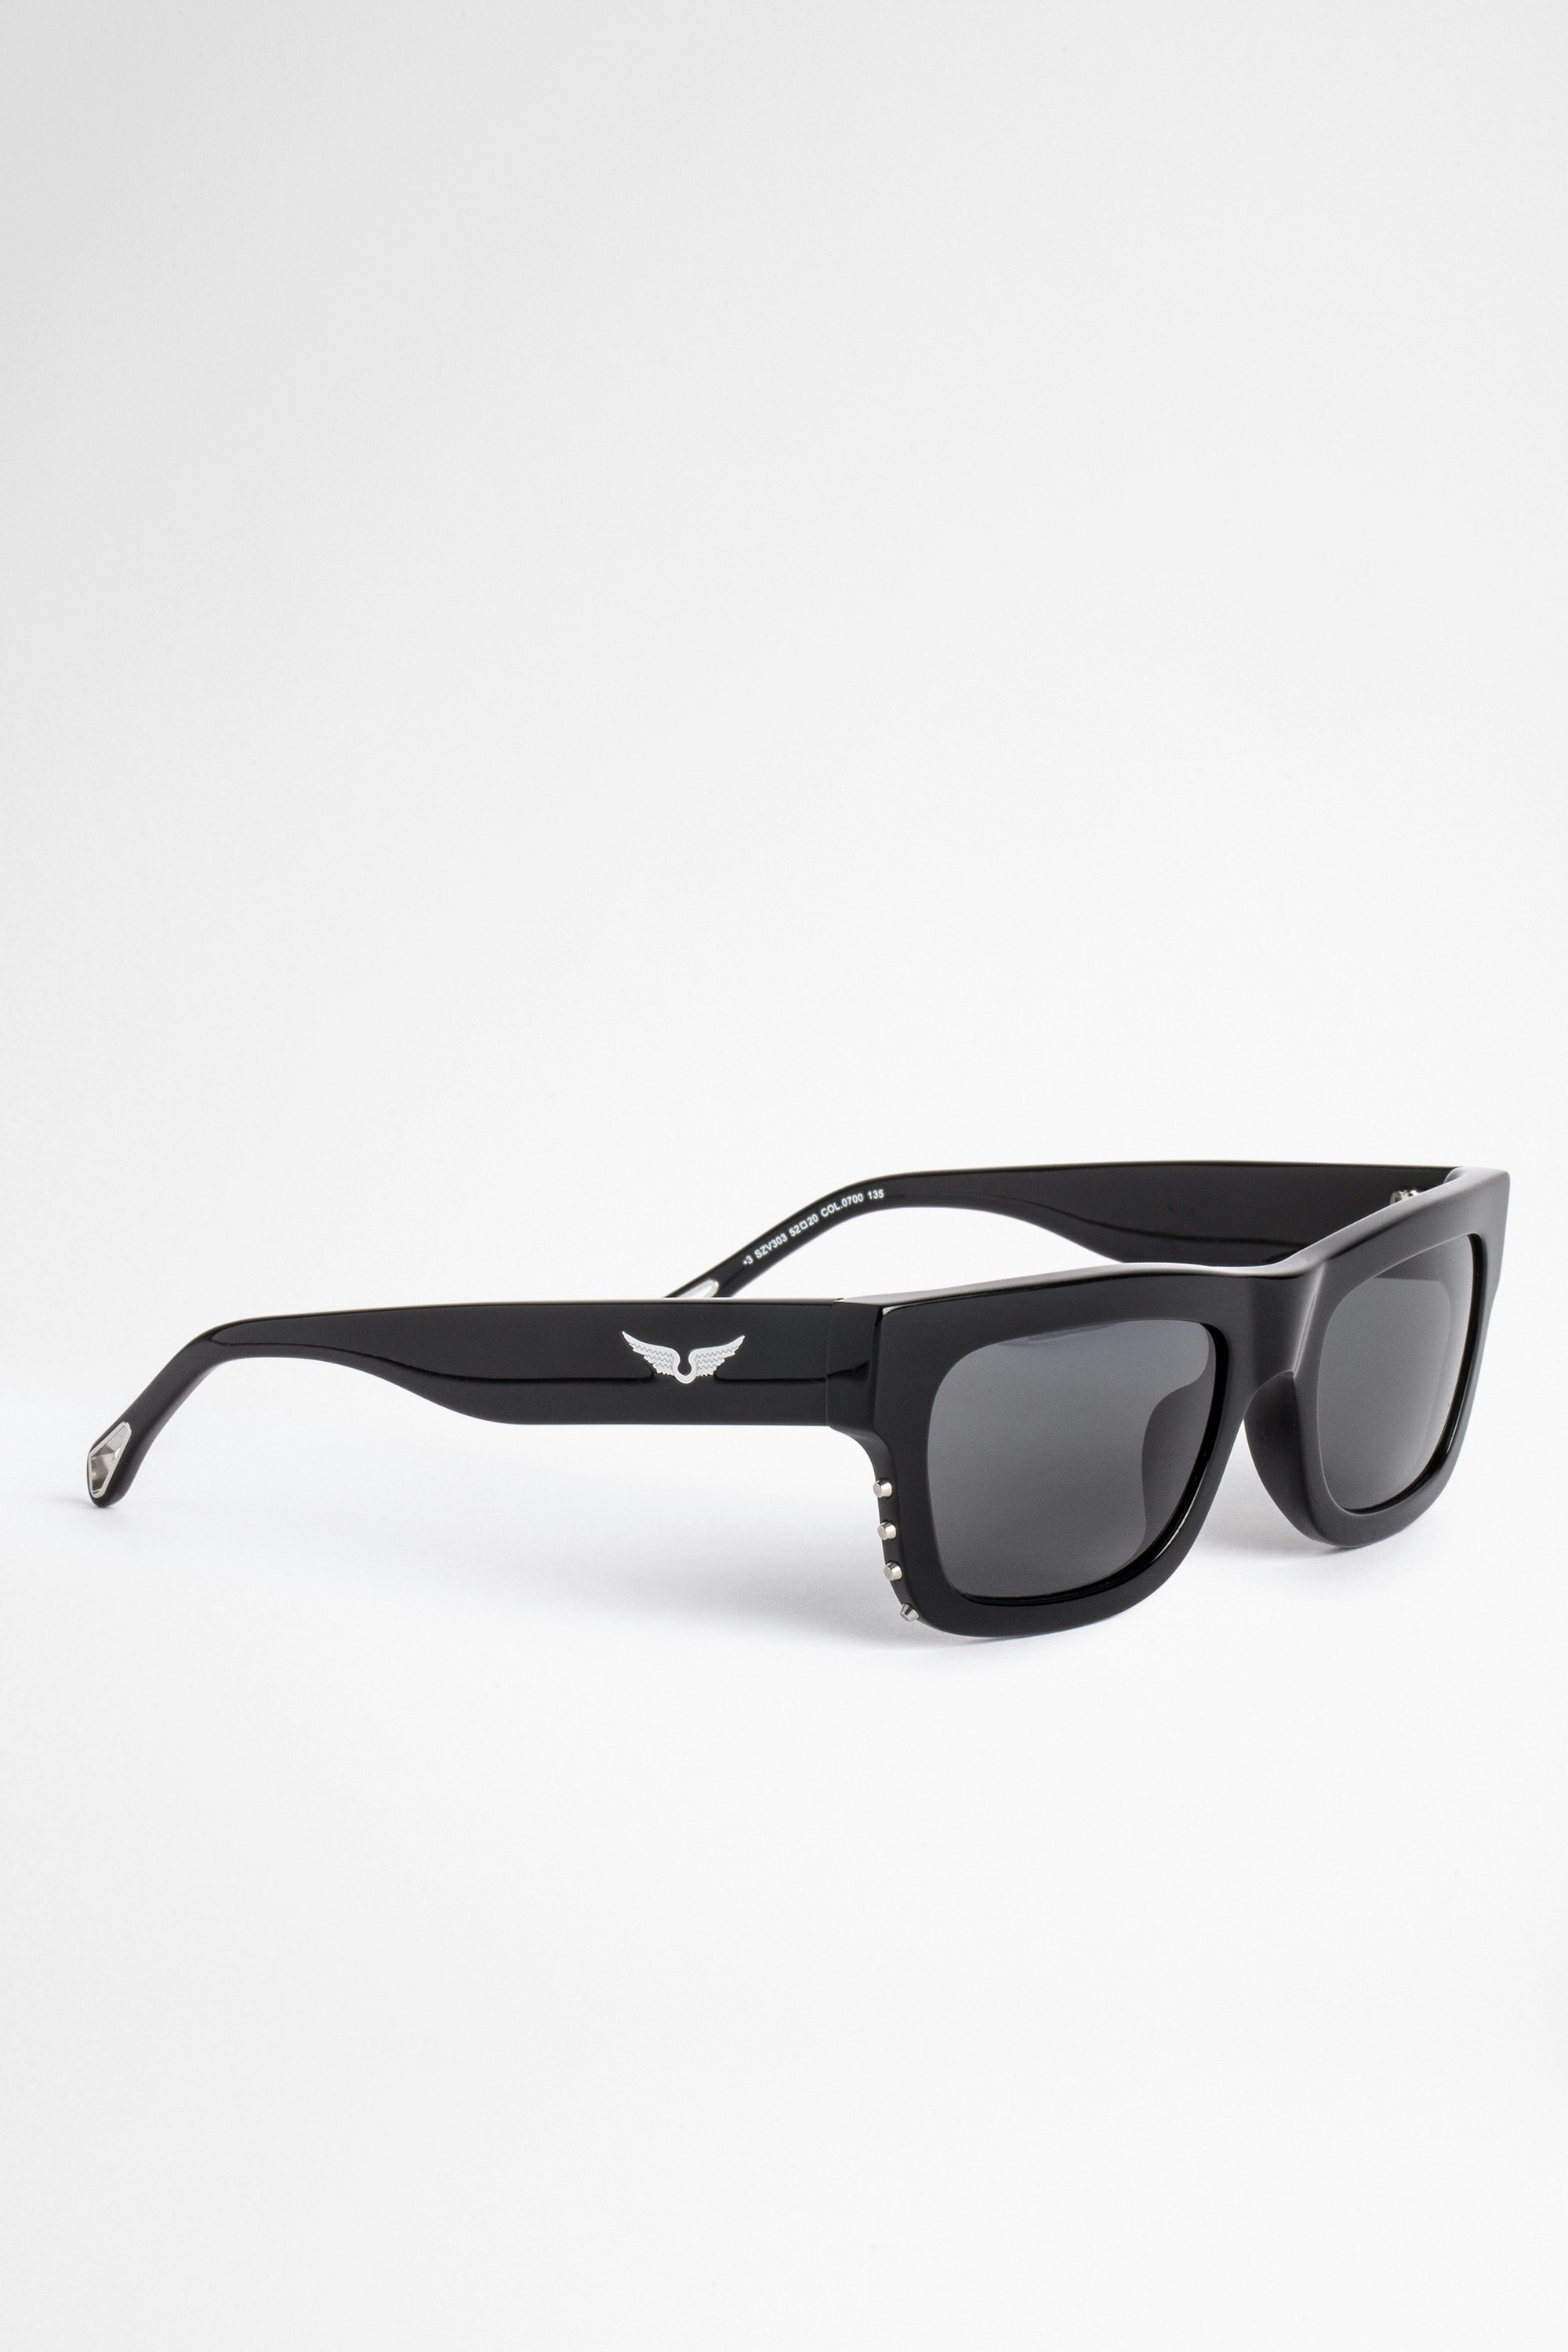 Shiny Glasses Unisex sunglasses Zadig&Volatire black acetate decorated with small metal studs.